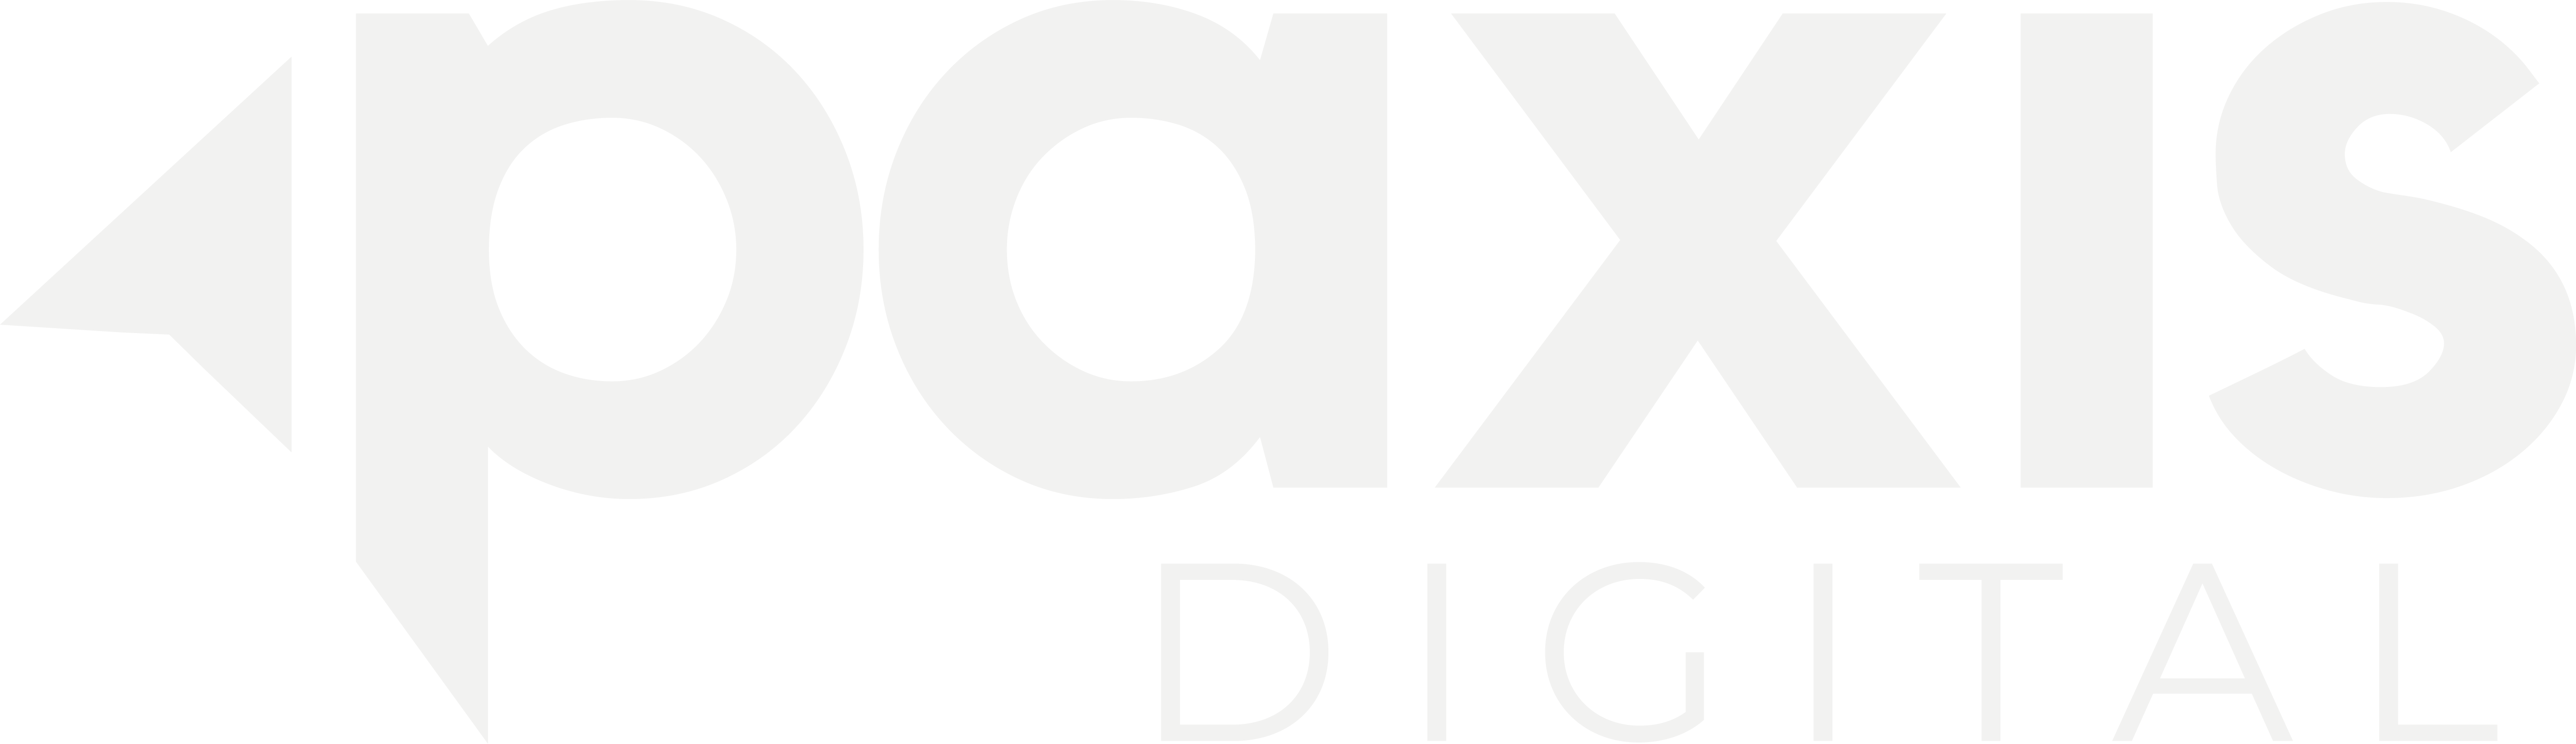 Paxis Digital